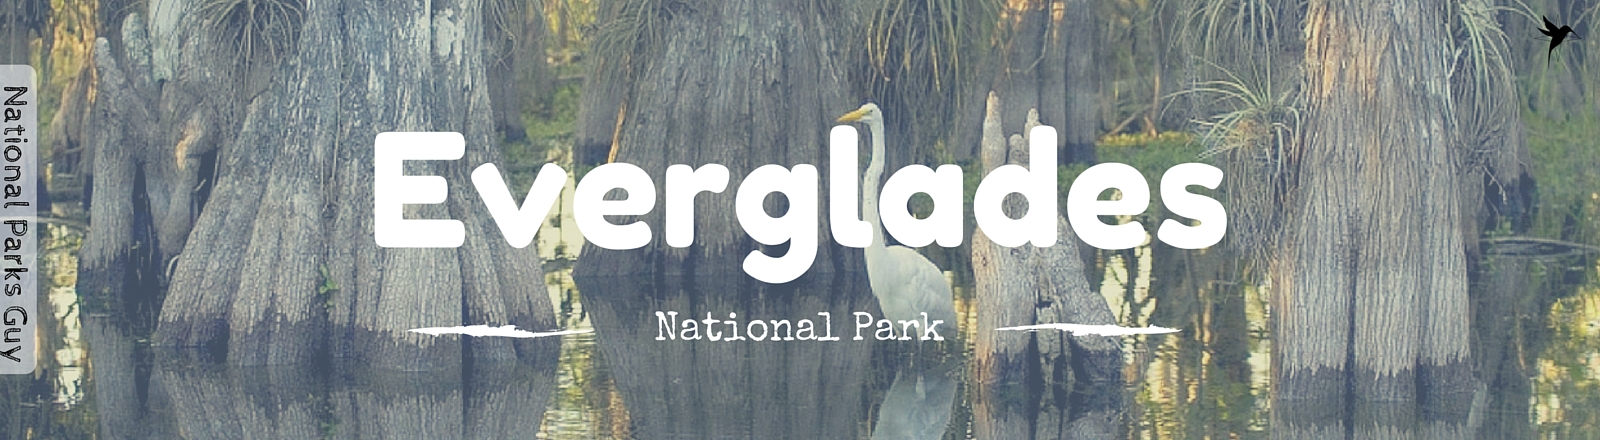 Everglades National Park, USA, National Parks Guy, Stories, Tales, Adventures, Wildlife